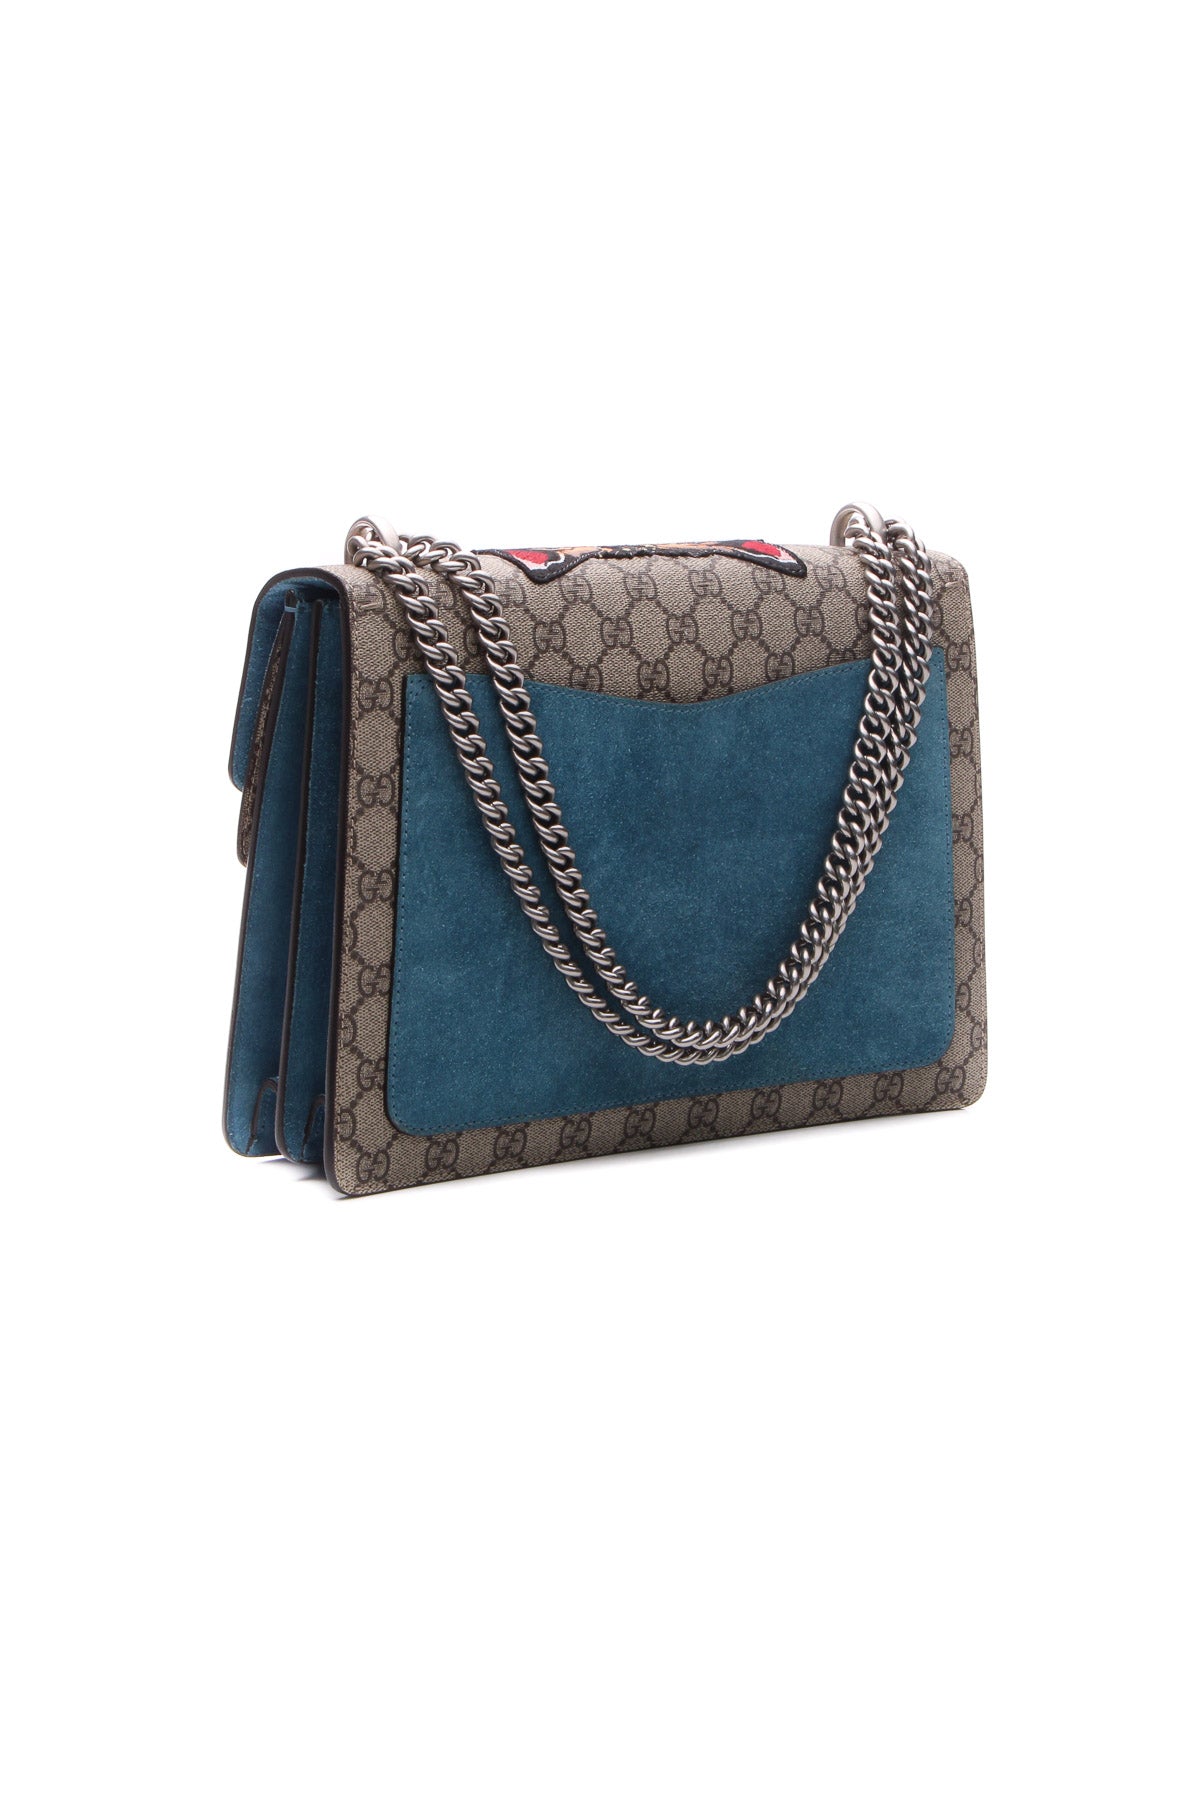 Gucci Dionysus Bag Blu And Red Leather Shoulder Bag For Sale at